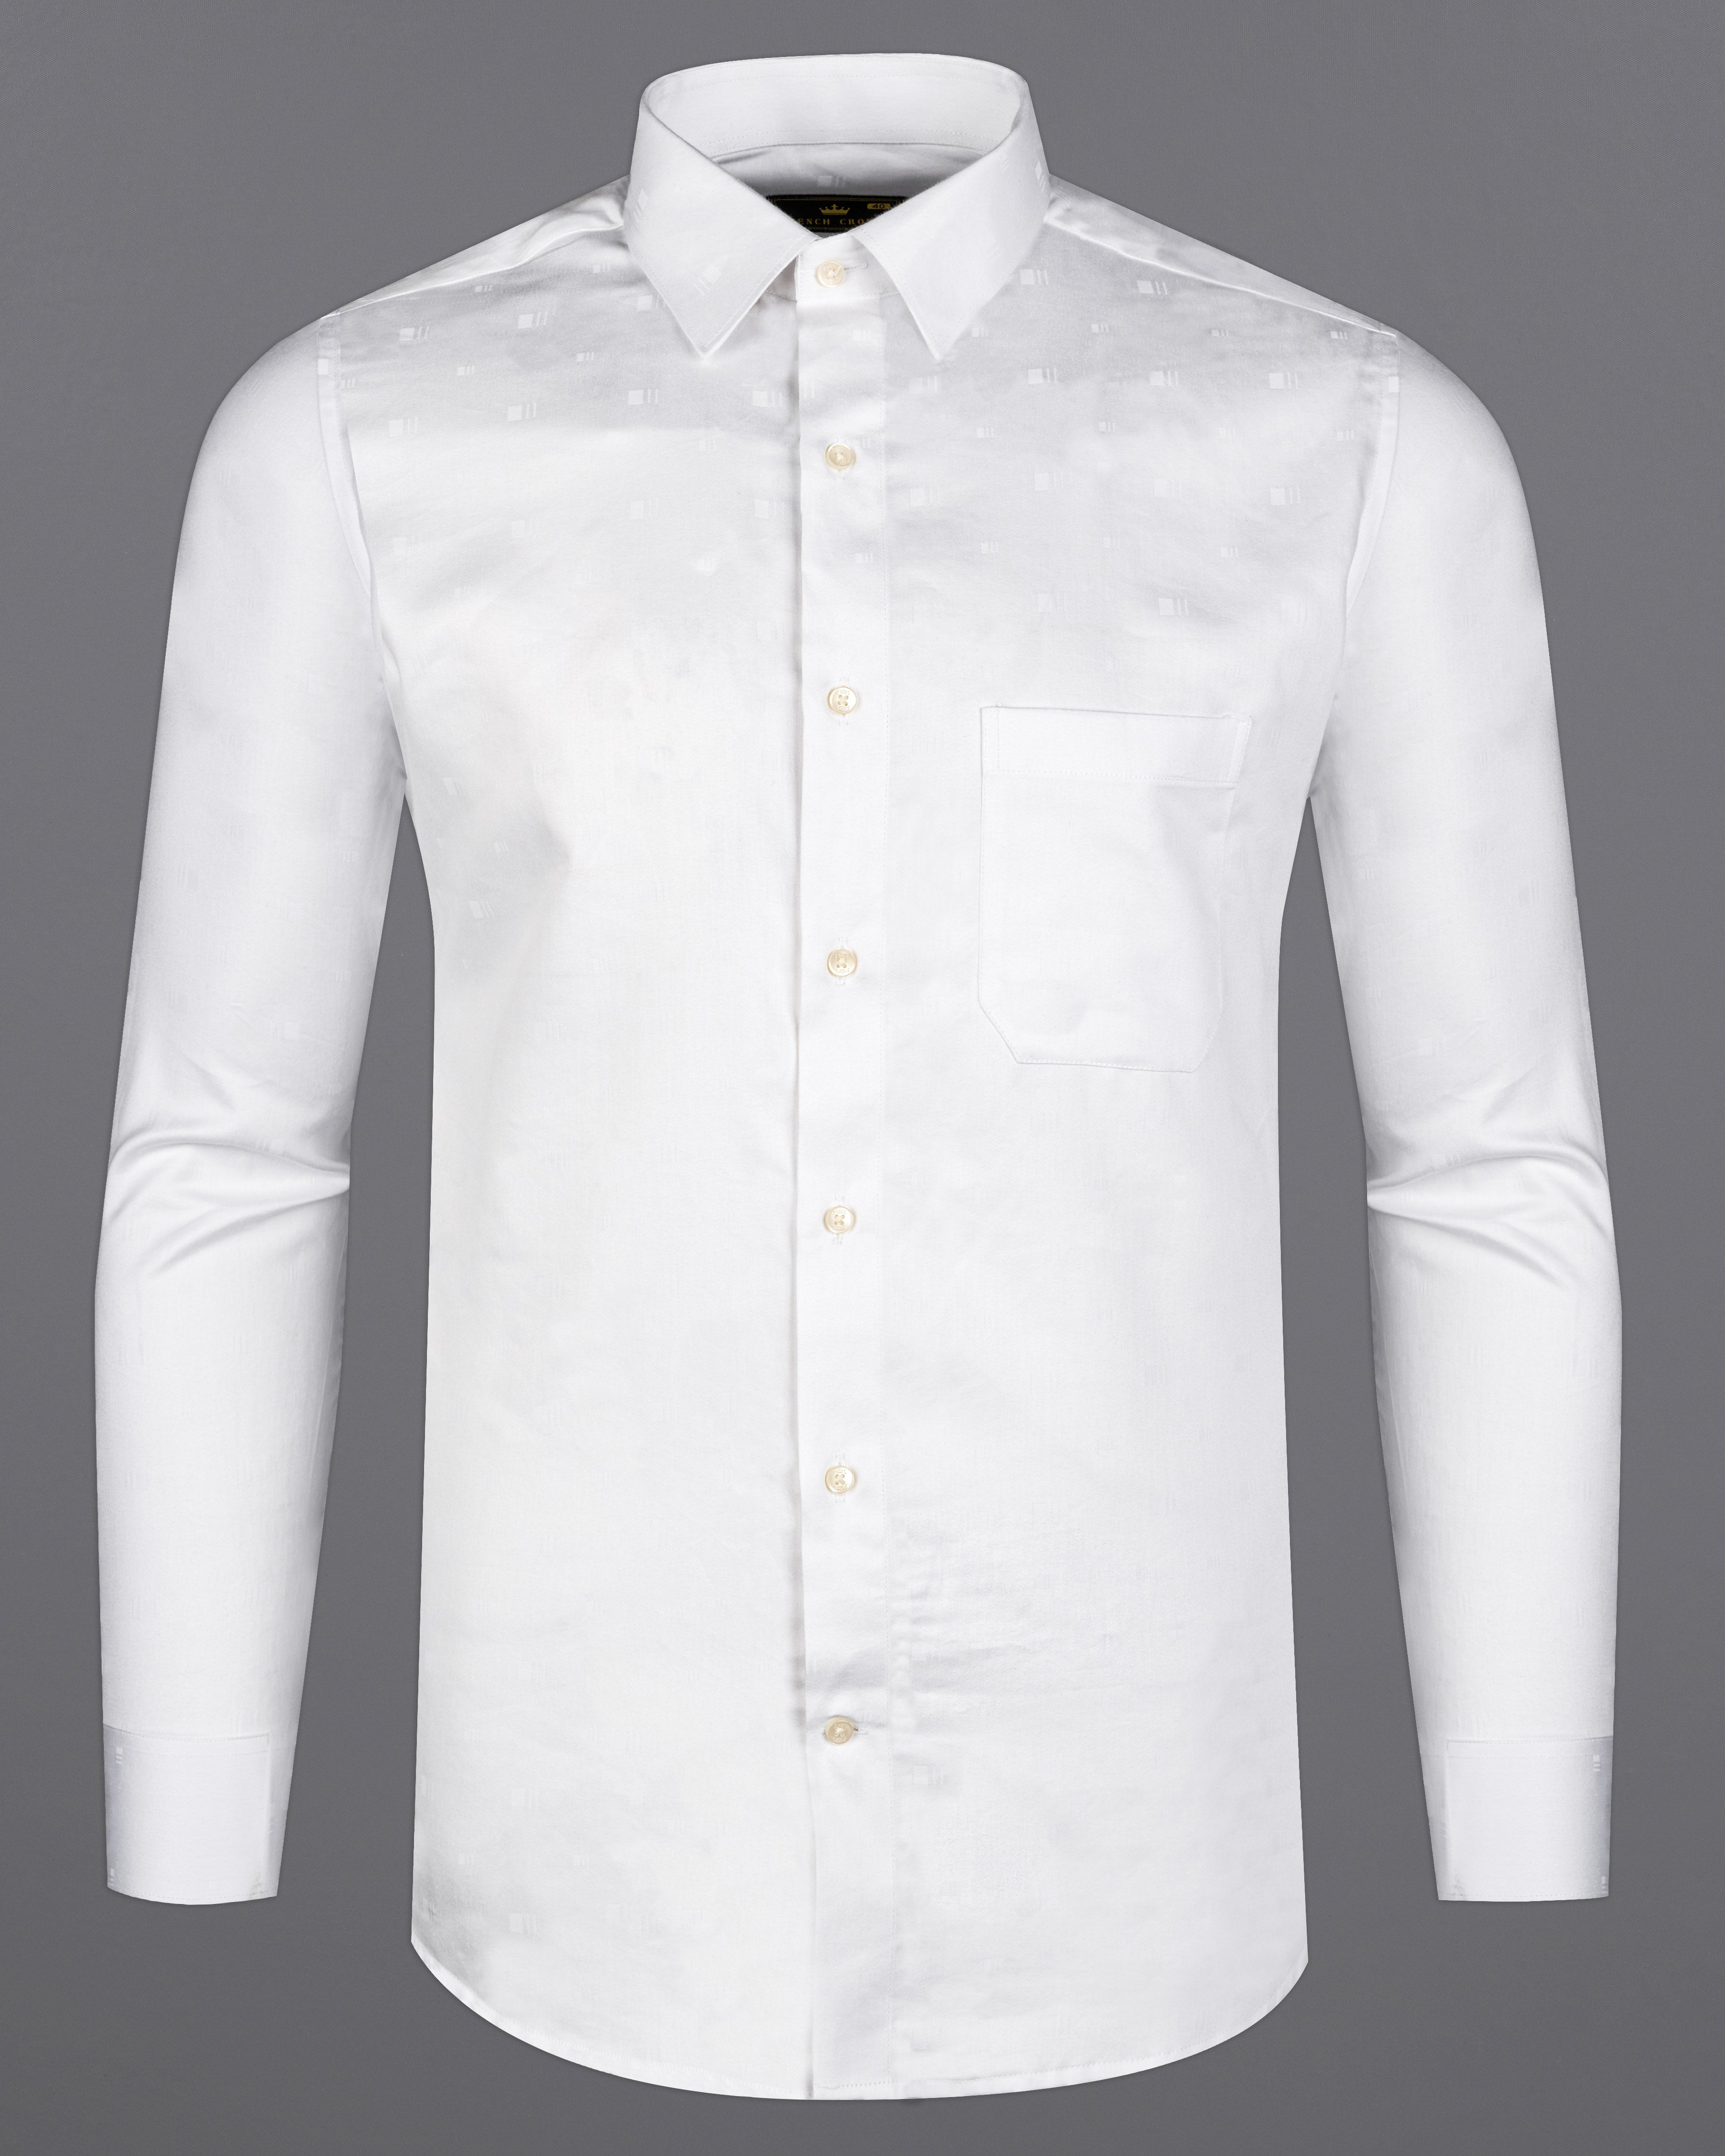 Bright White Jacquard Textured Premium Giza Cotton Shirt 10003-38, 10003-H-38, 10003-39, 10003-H-39, 10003-40, 10003-H-40, 10003-42, 10003-H-42, 10003-44, 10003-H-44, 10003-46, 10003-H-46, 10003-48, 10003-H-48, 10003-50, 10003-H-50, 10003-52, 10003-H-52